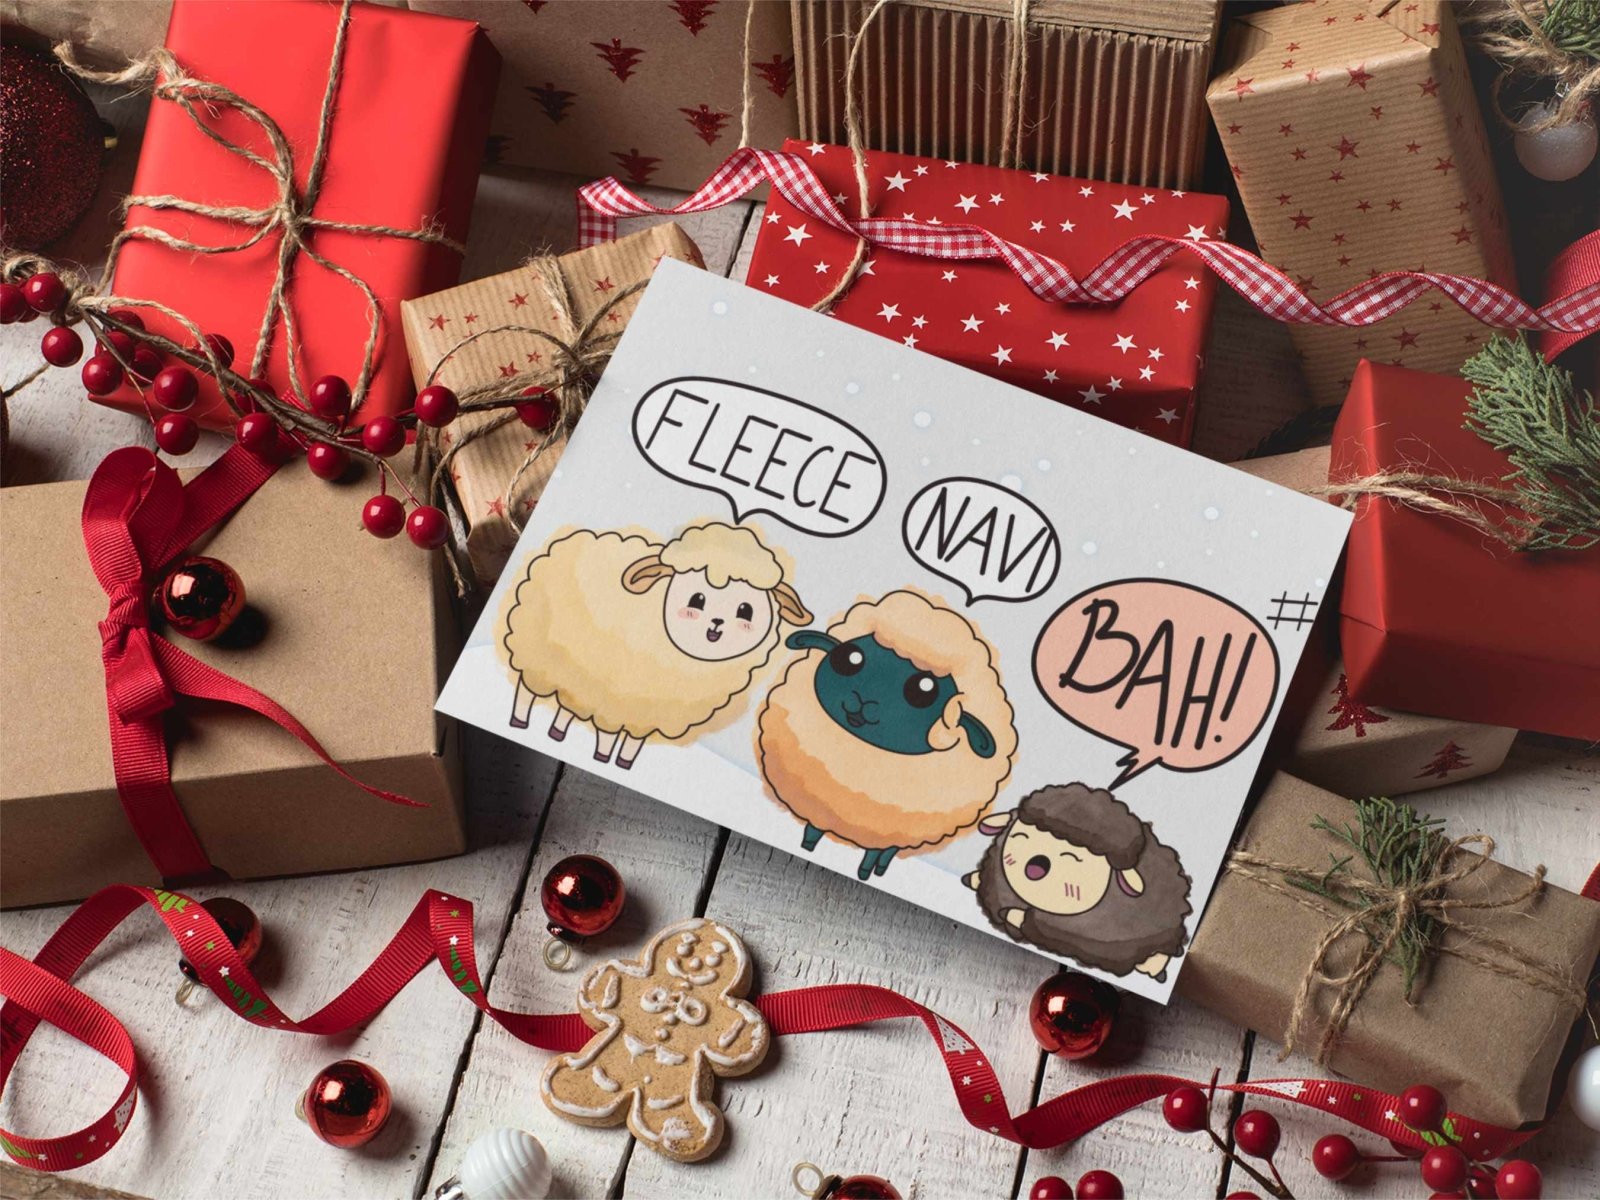 Fleece Navi Bah Christmas Card - Greeting Cards - UpperRoomPrints